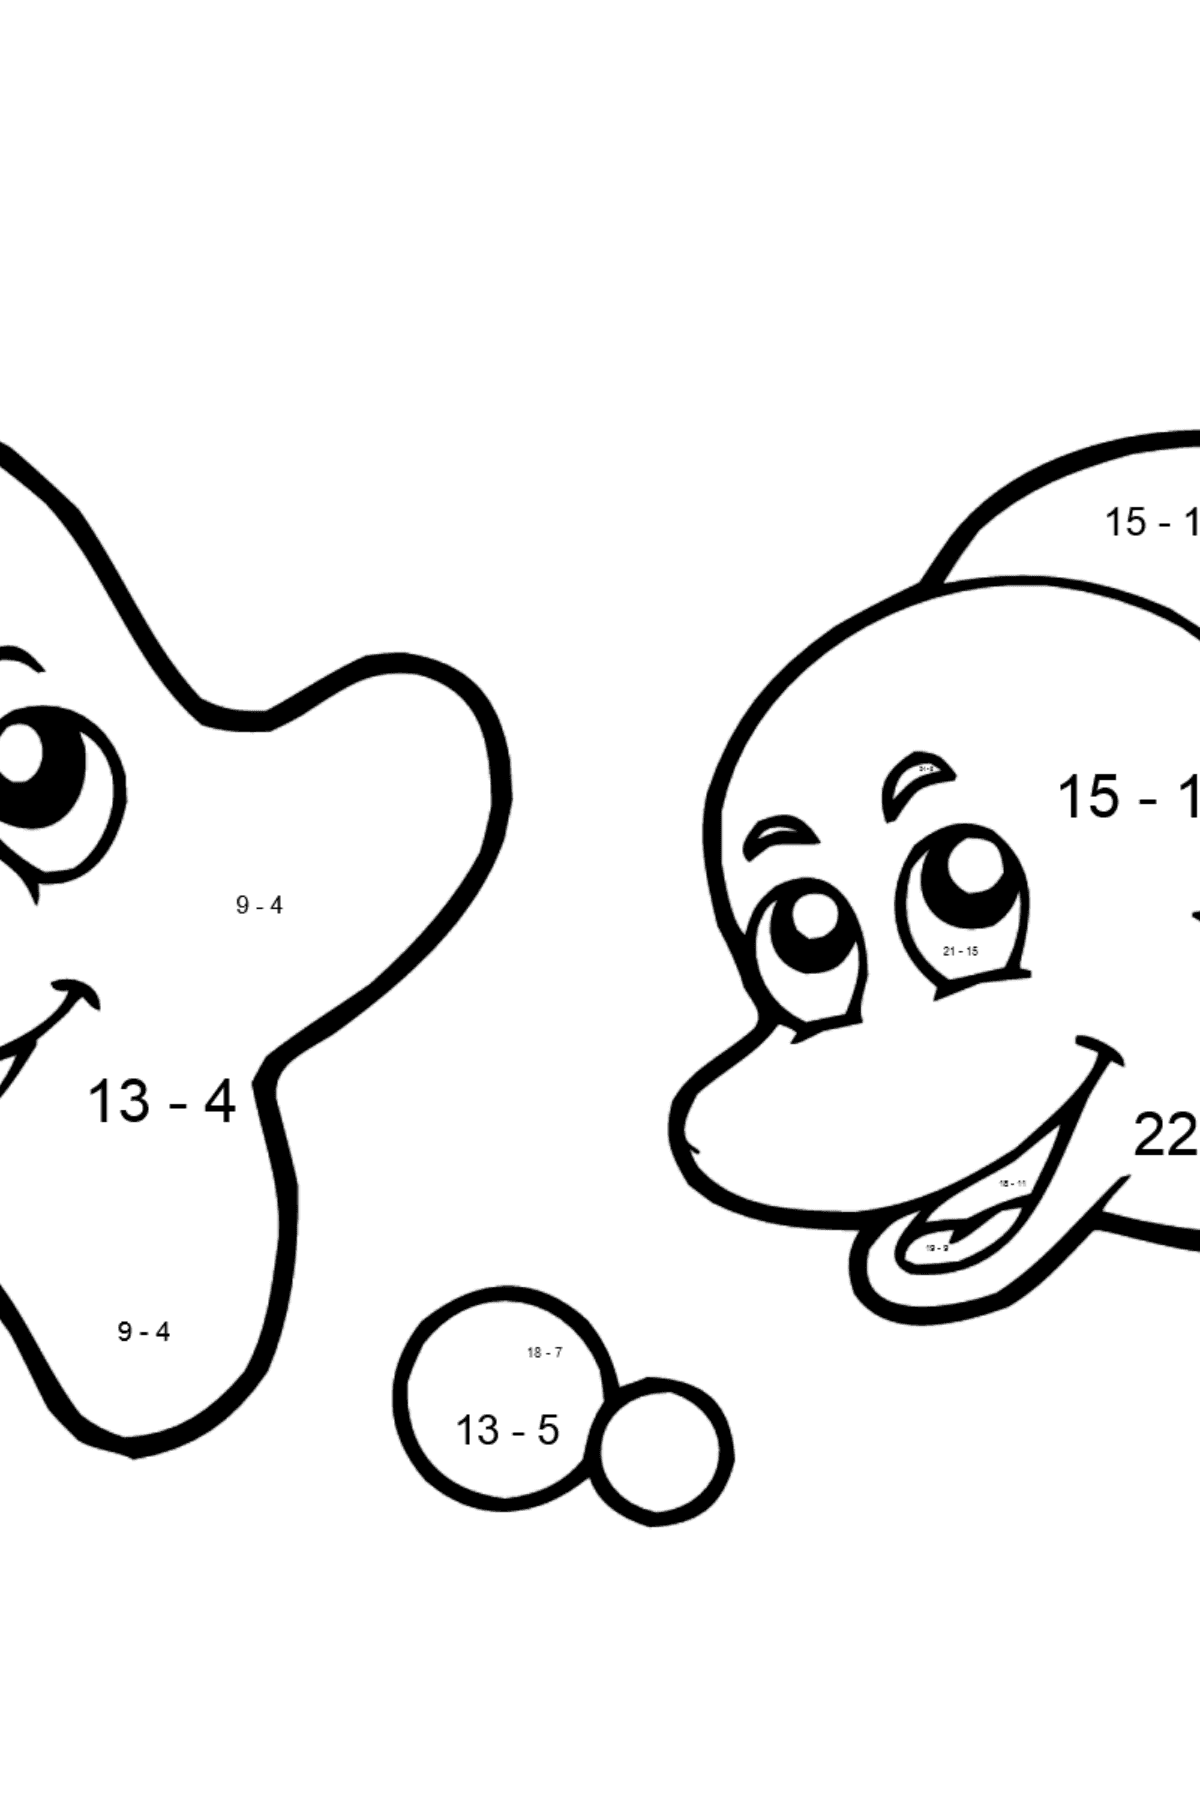 Розмальовка - Дельфін та Морська зірка - Математична Розмальовка Віднімання для дітей